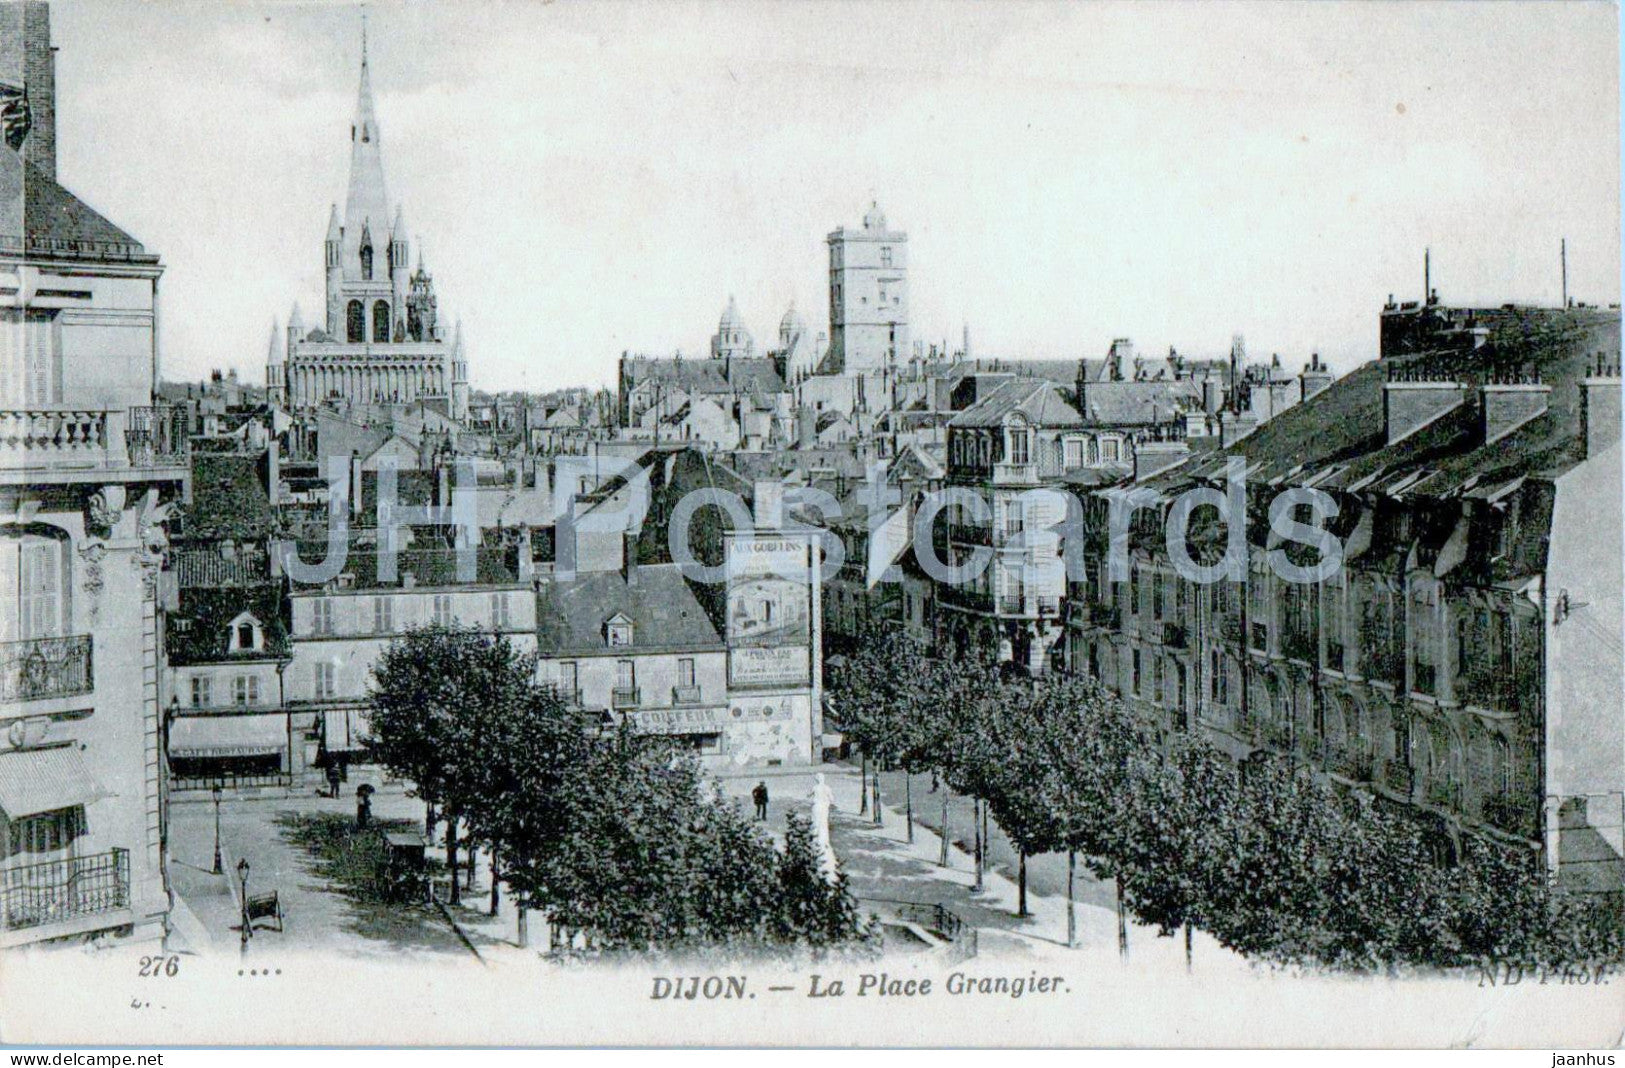 Dijon - La Place Grangier - 276 - old postcard - 1950 - France - used - JH Postcards